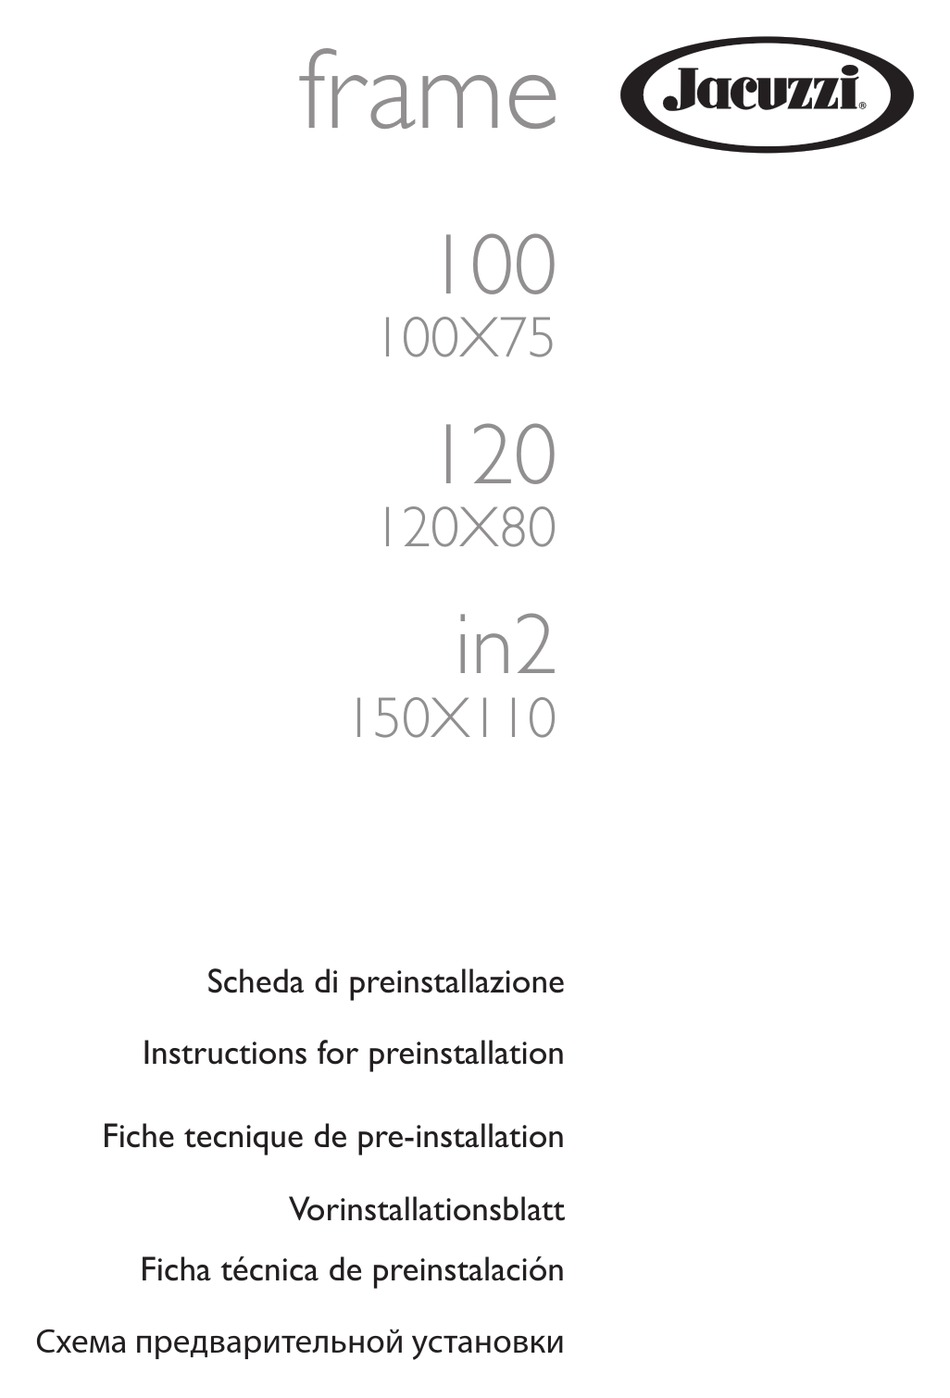 JACUZZI FRAME 100 INSTRUCTIONS FOR PREINSTALLATION Pdf Download ...